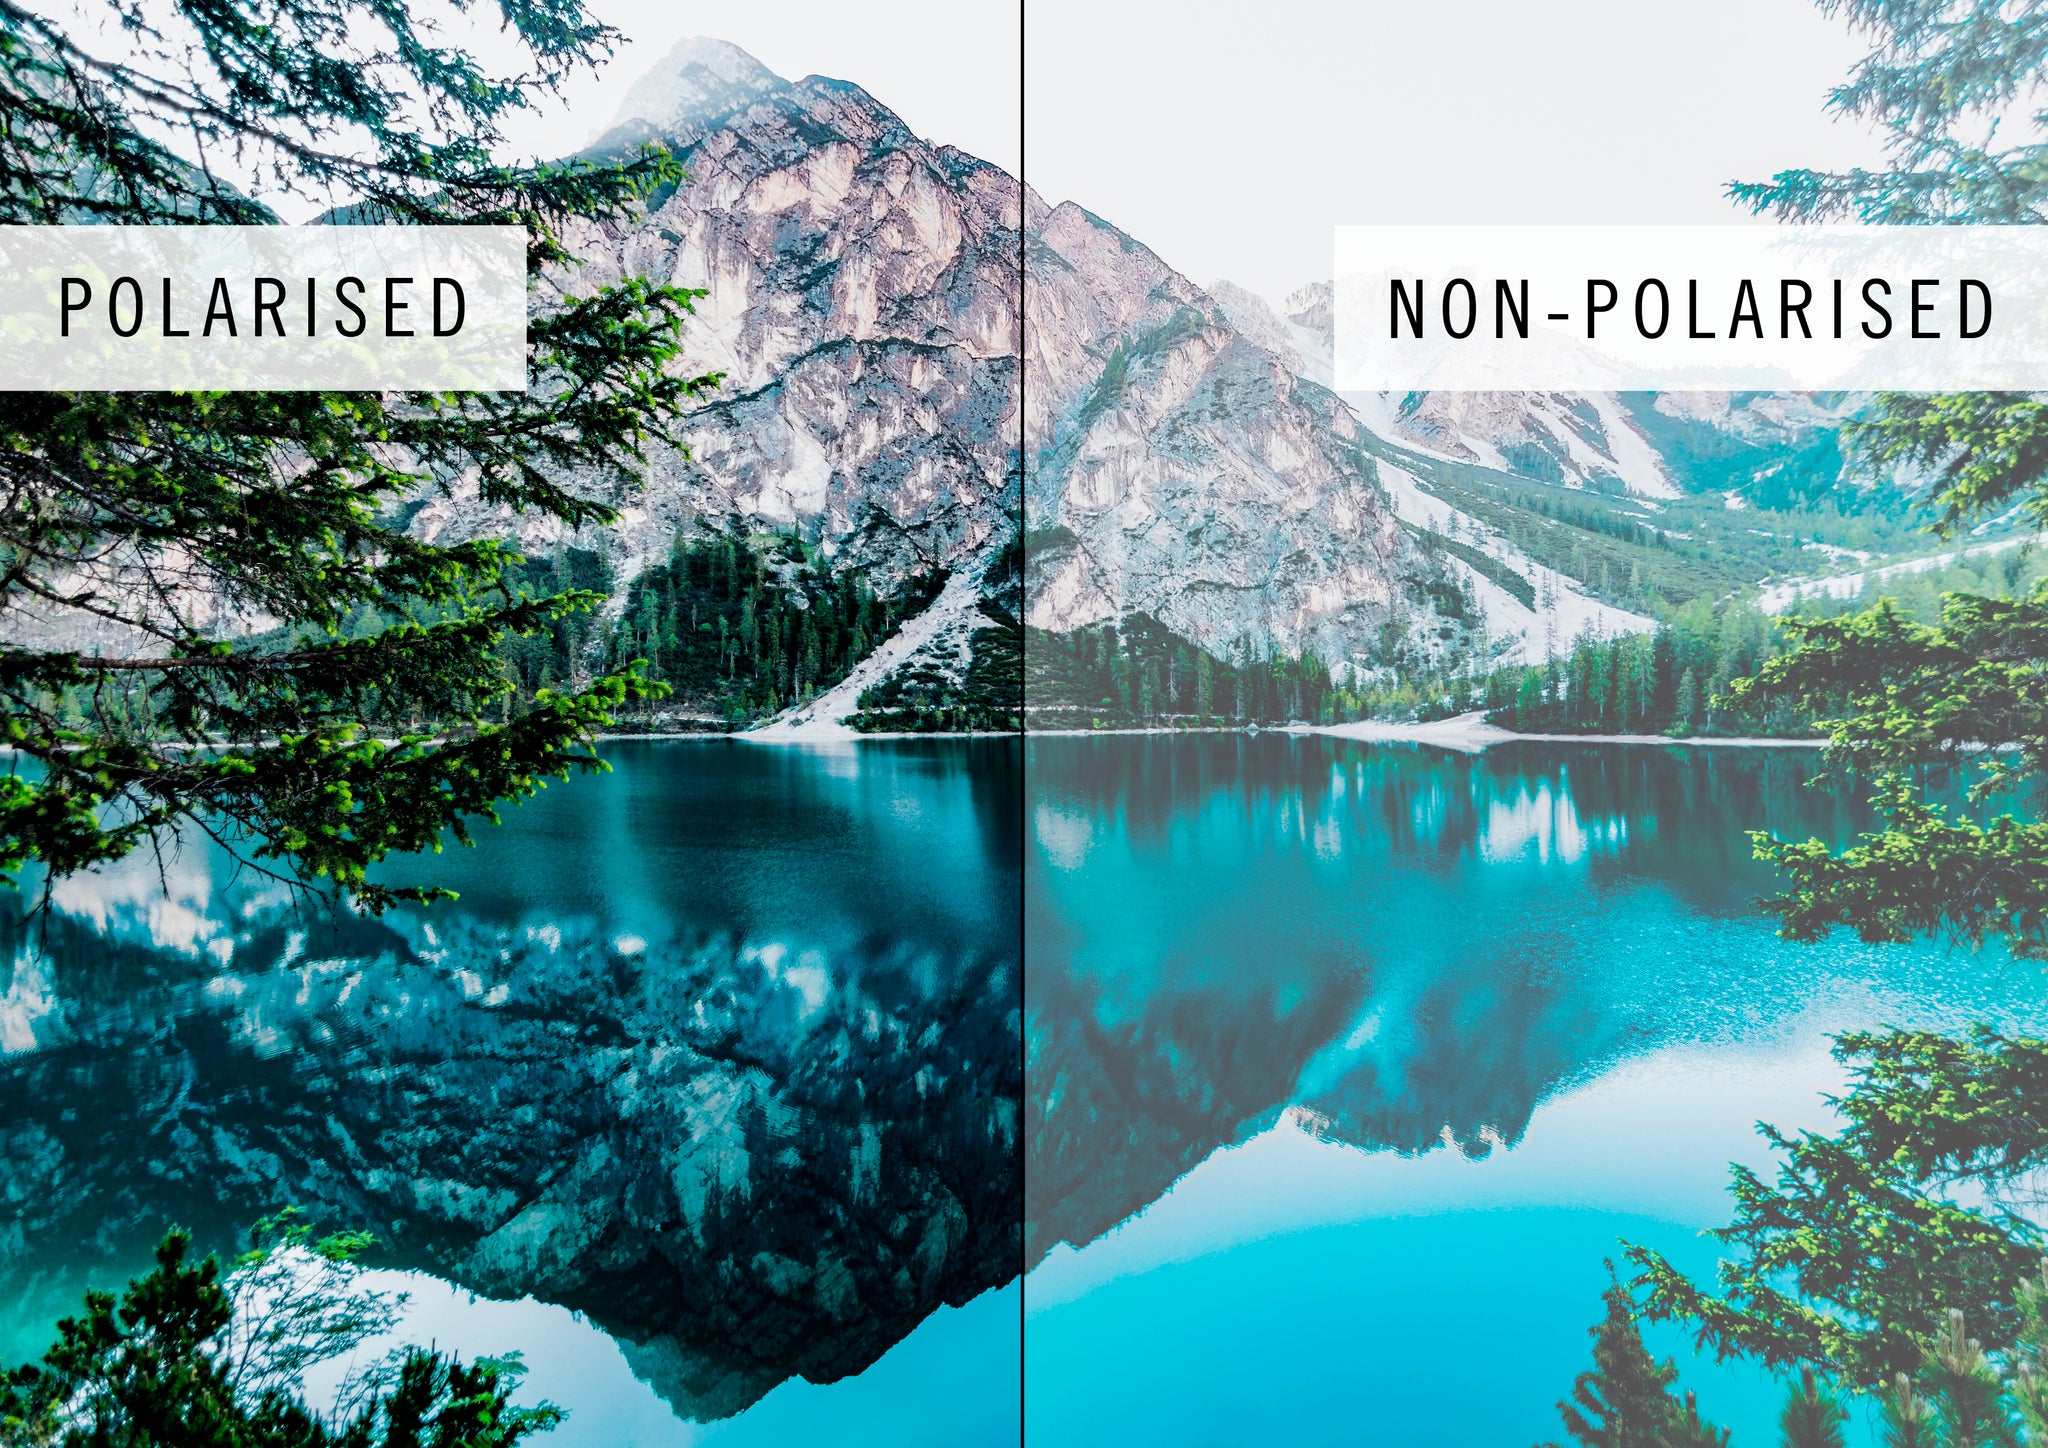 Pacifico Optical polarised vs non-polarised comparison